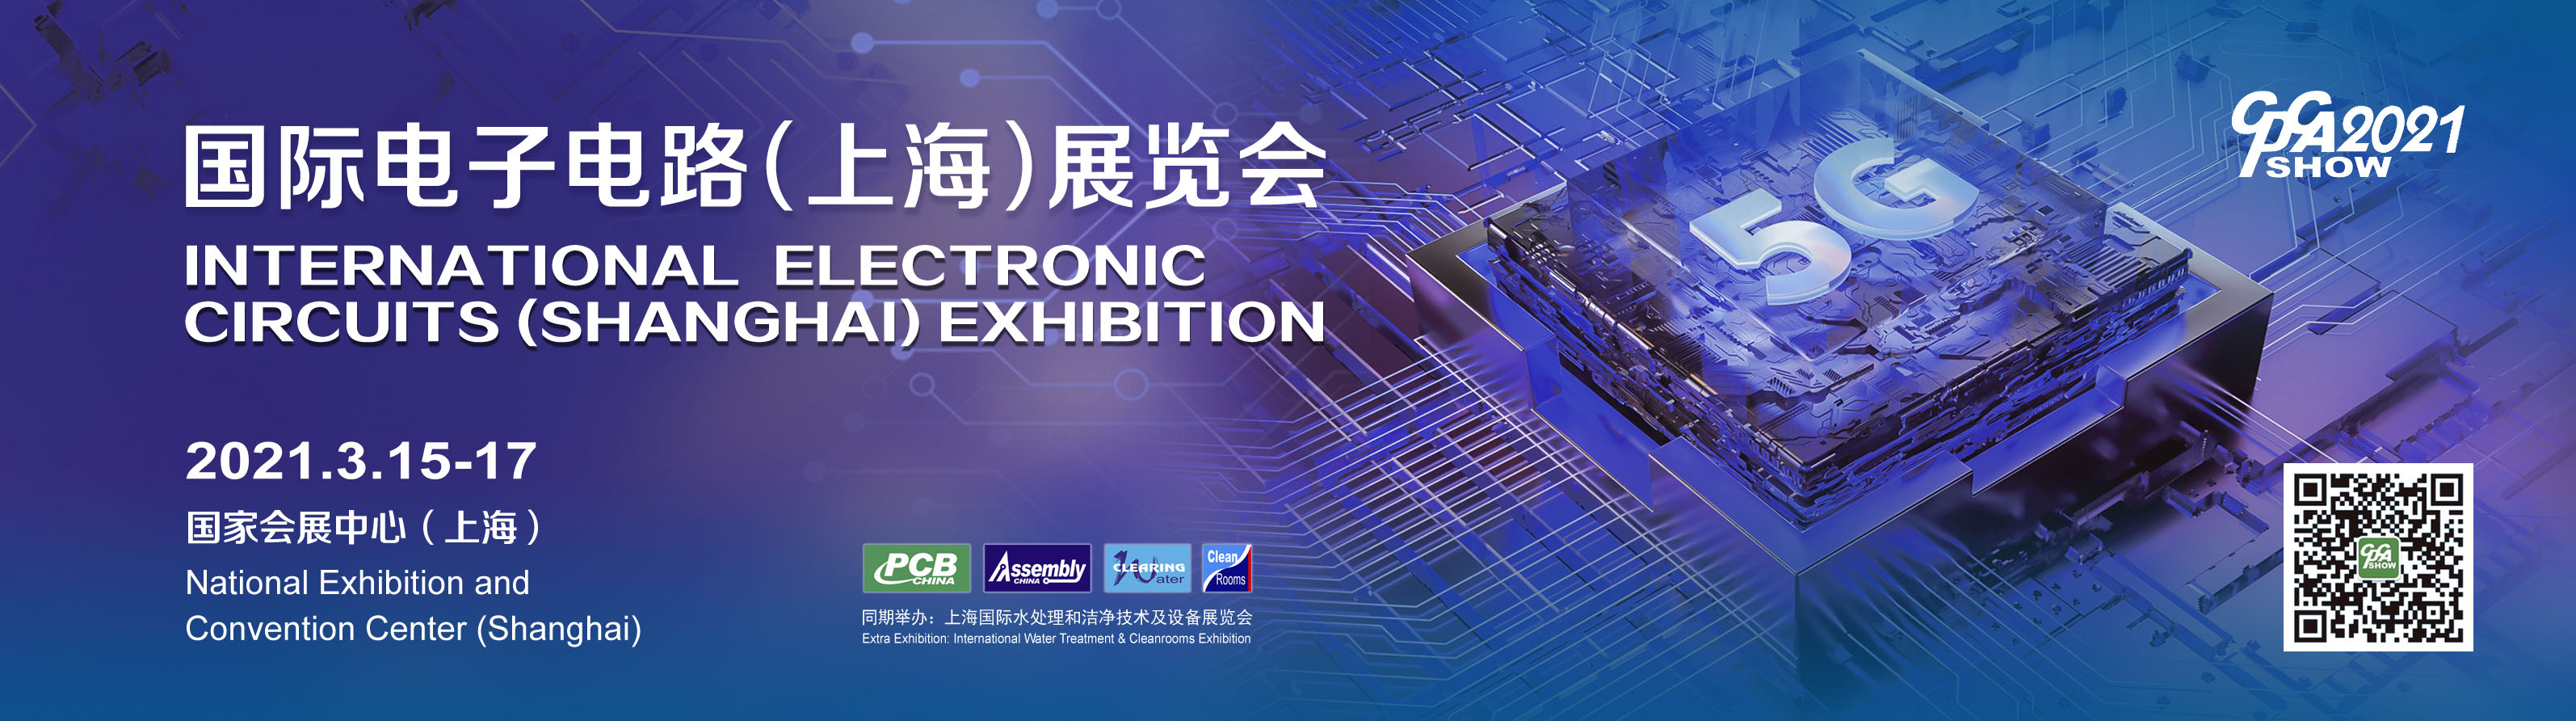 International Electronics Circuit (Shanghai) Exhibition